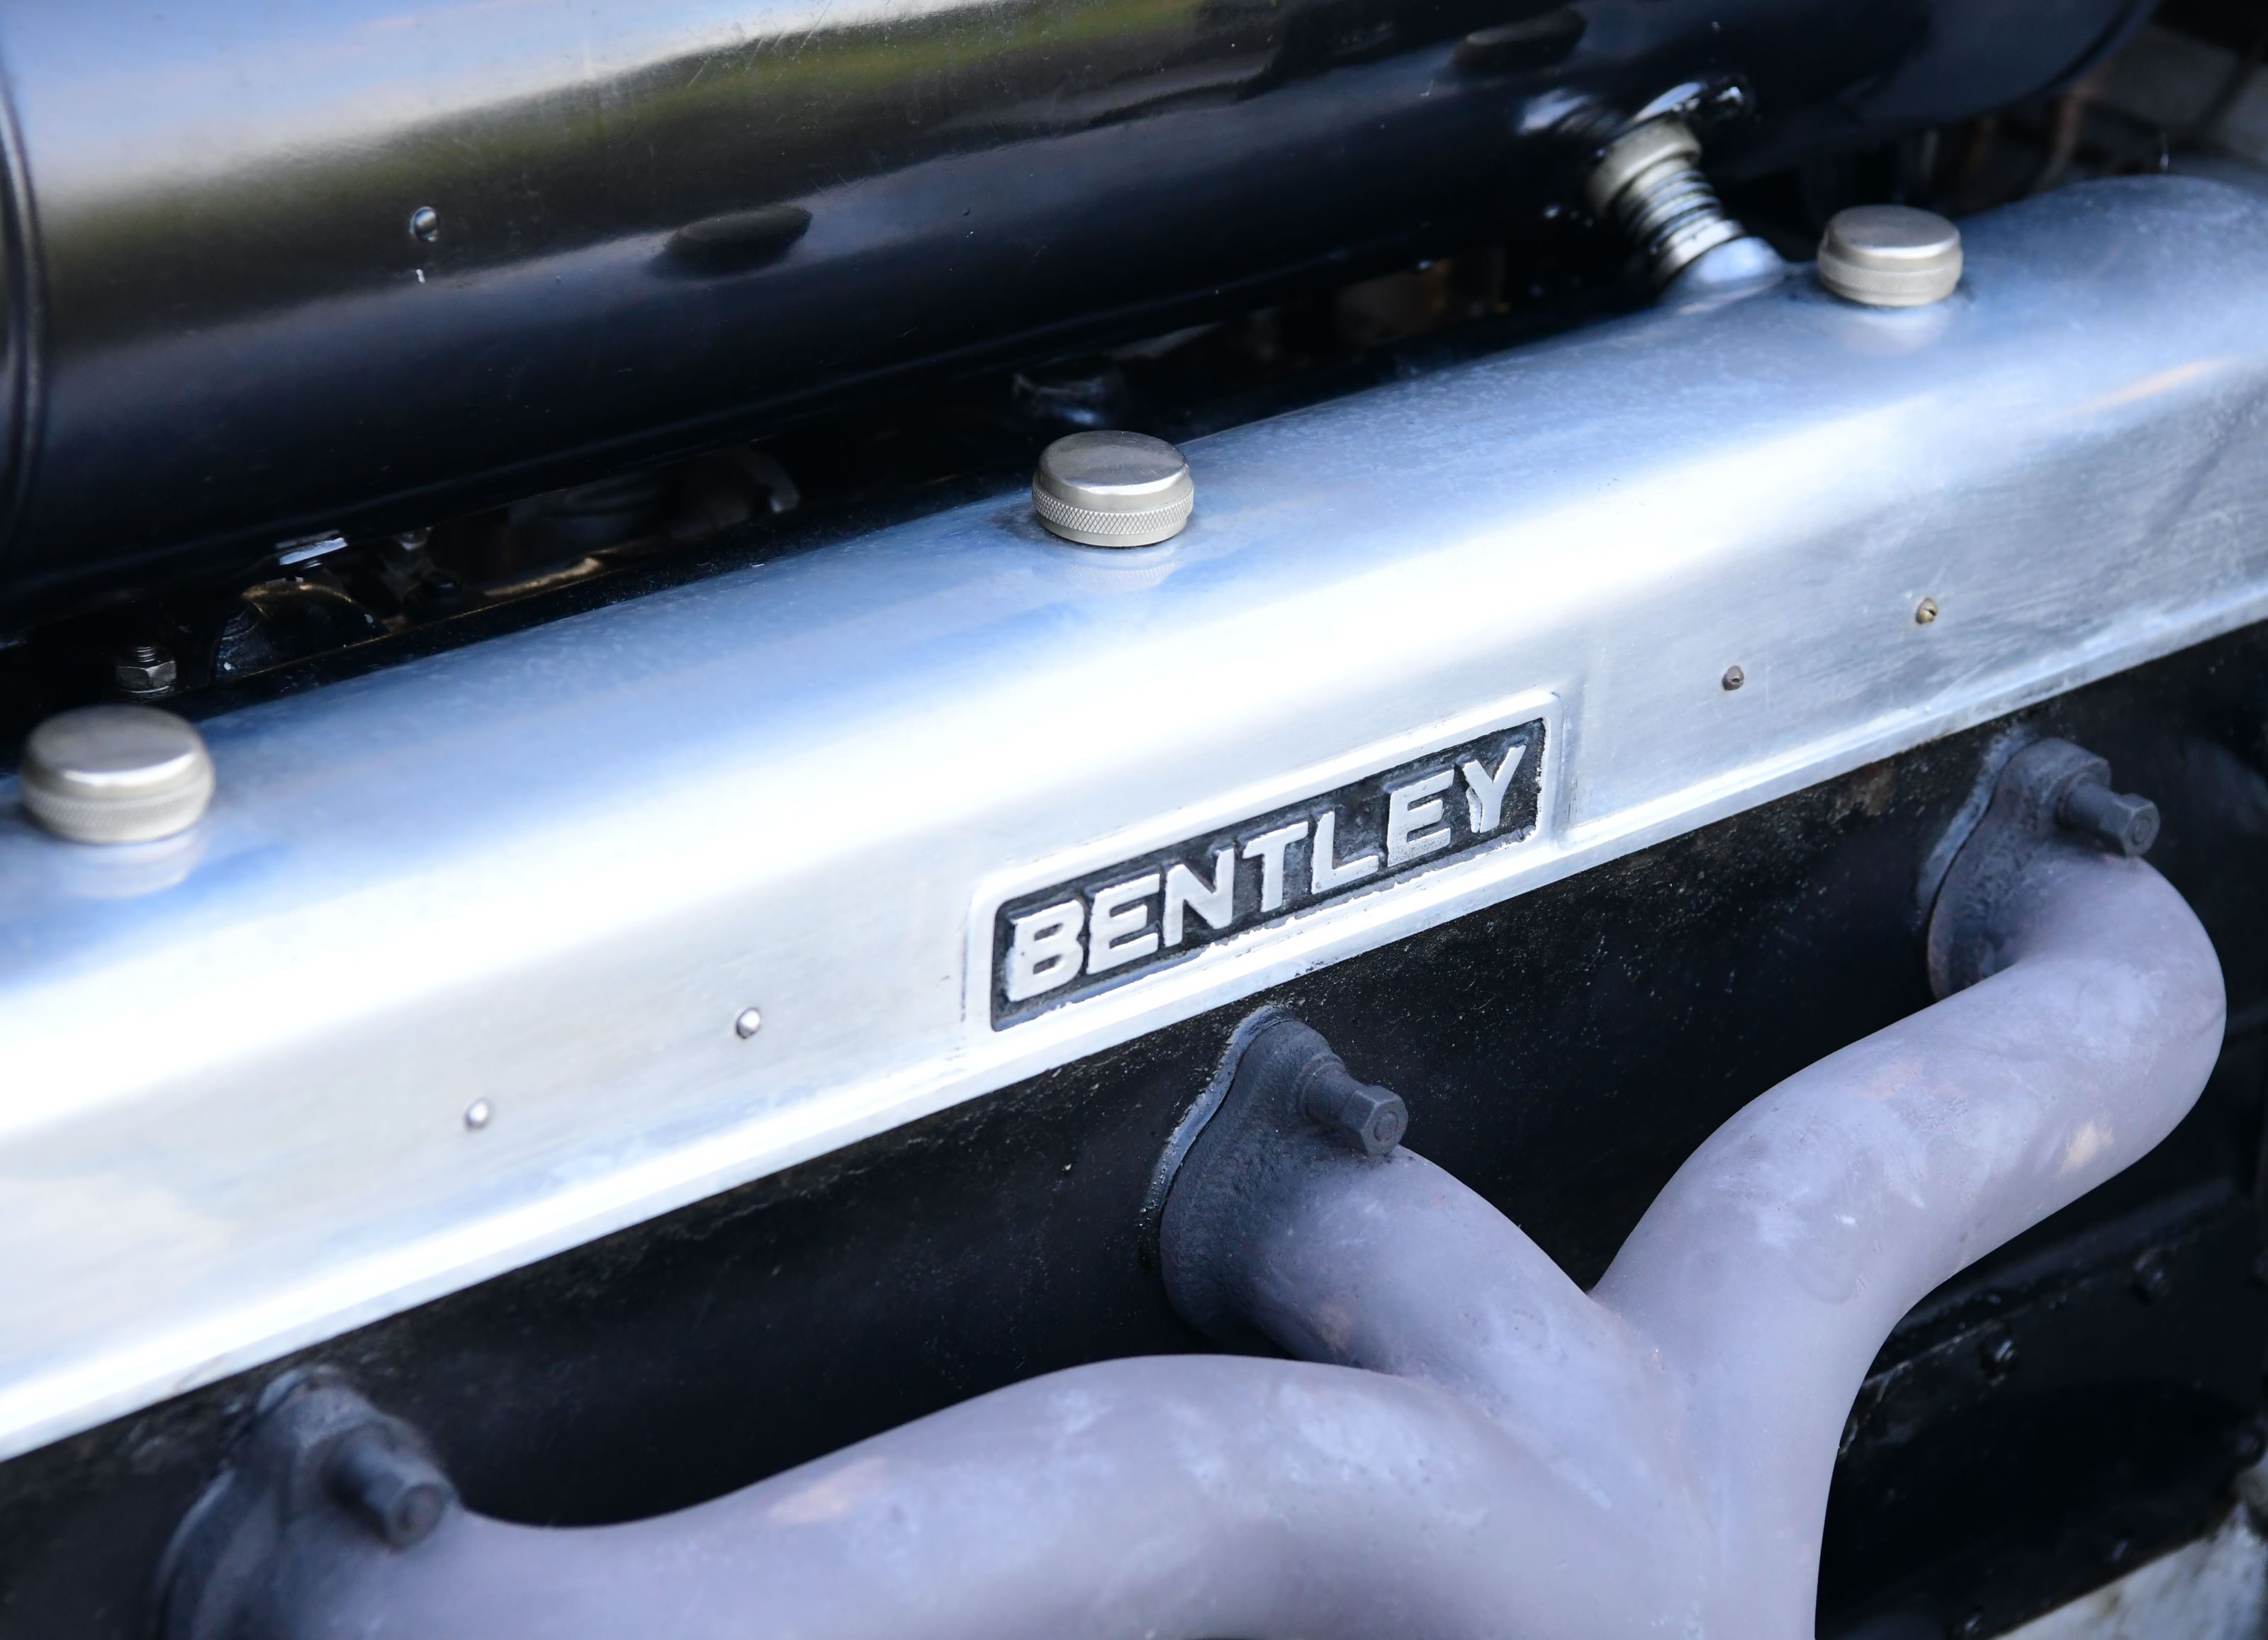 Bentley derby 4.25 sedanca by thrupp  maberly ny7nmspwsqai4vfcipwax